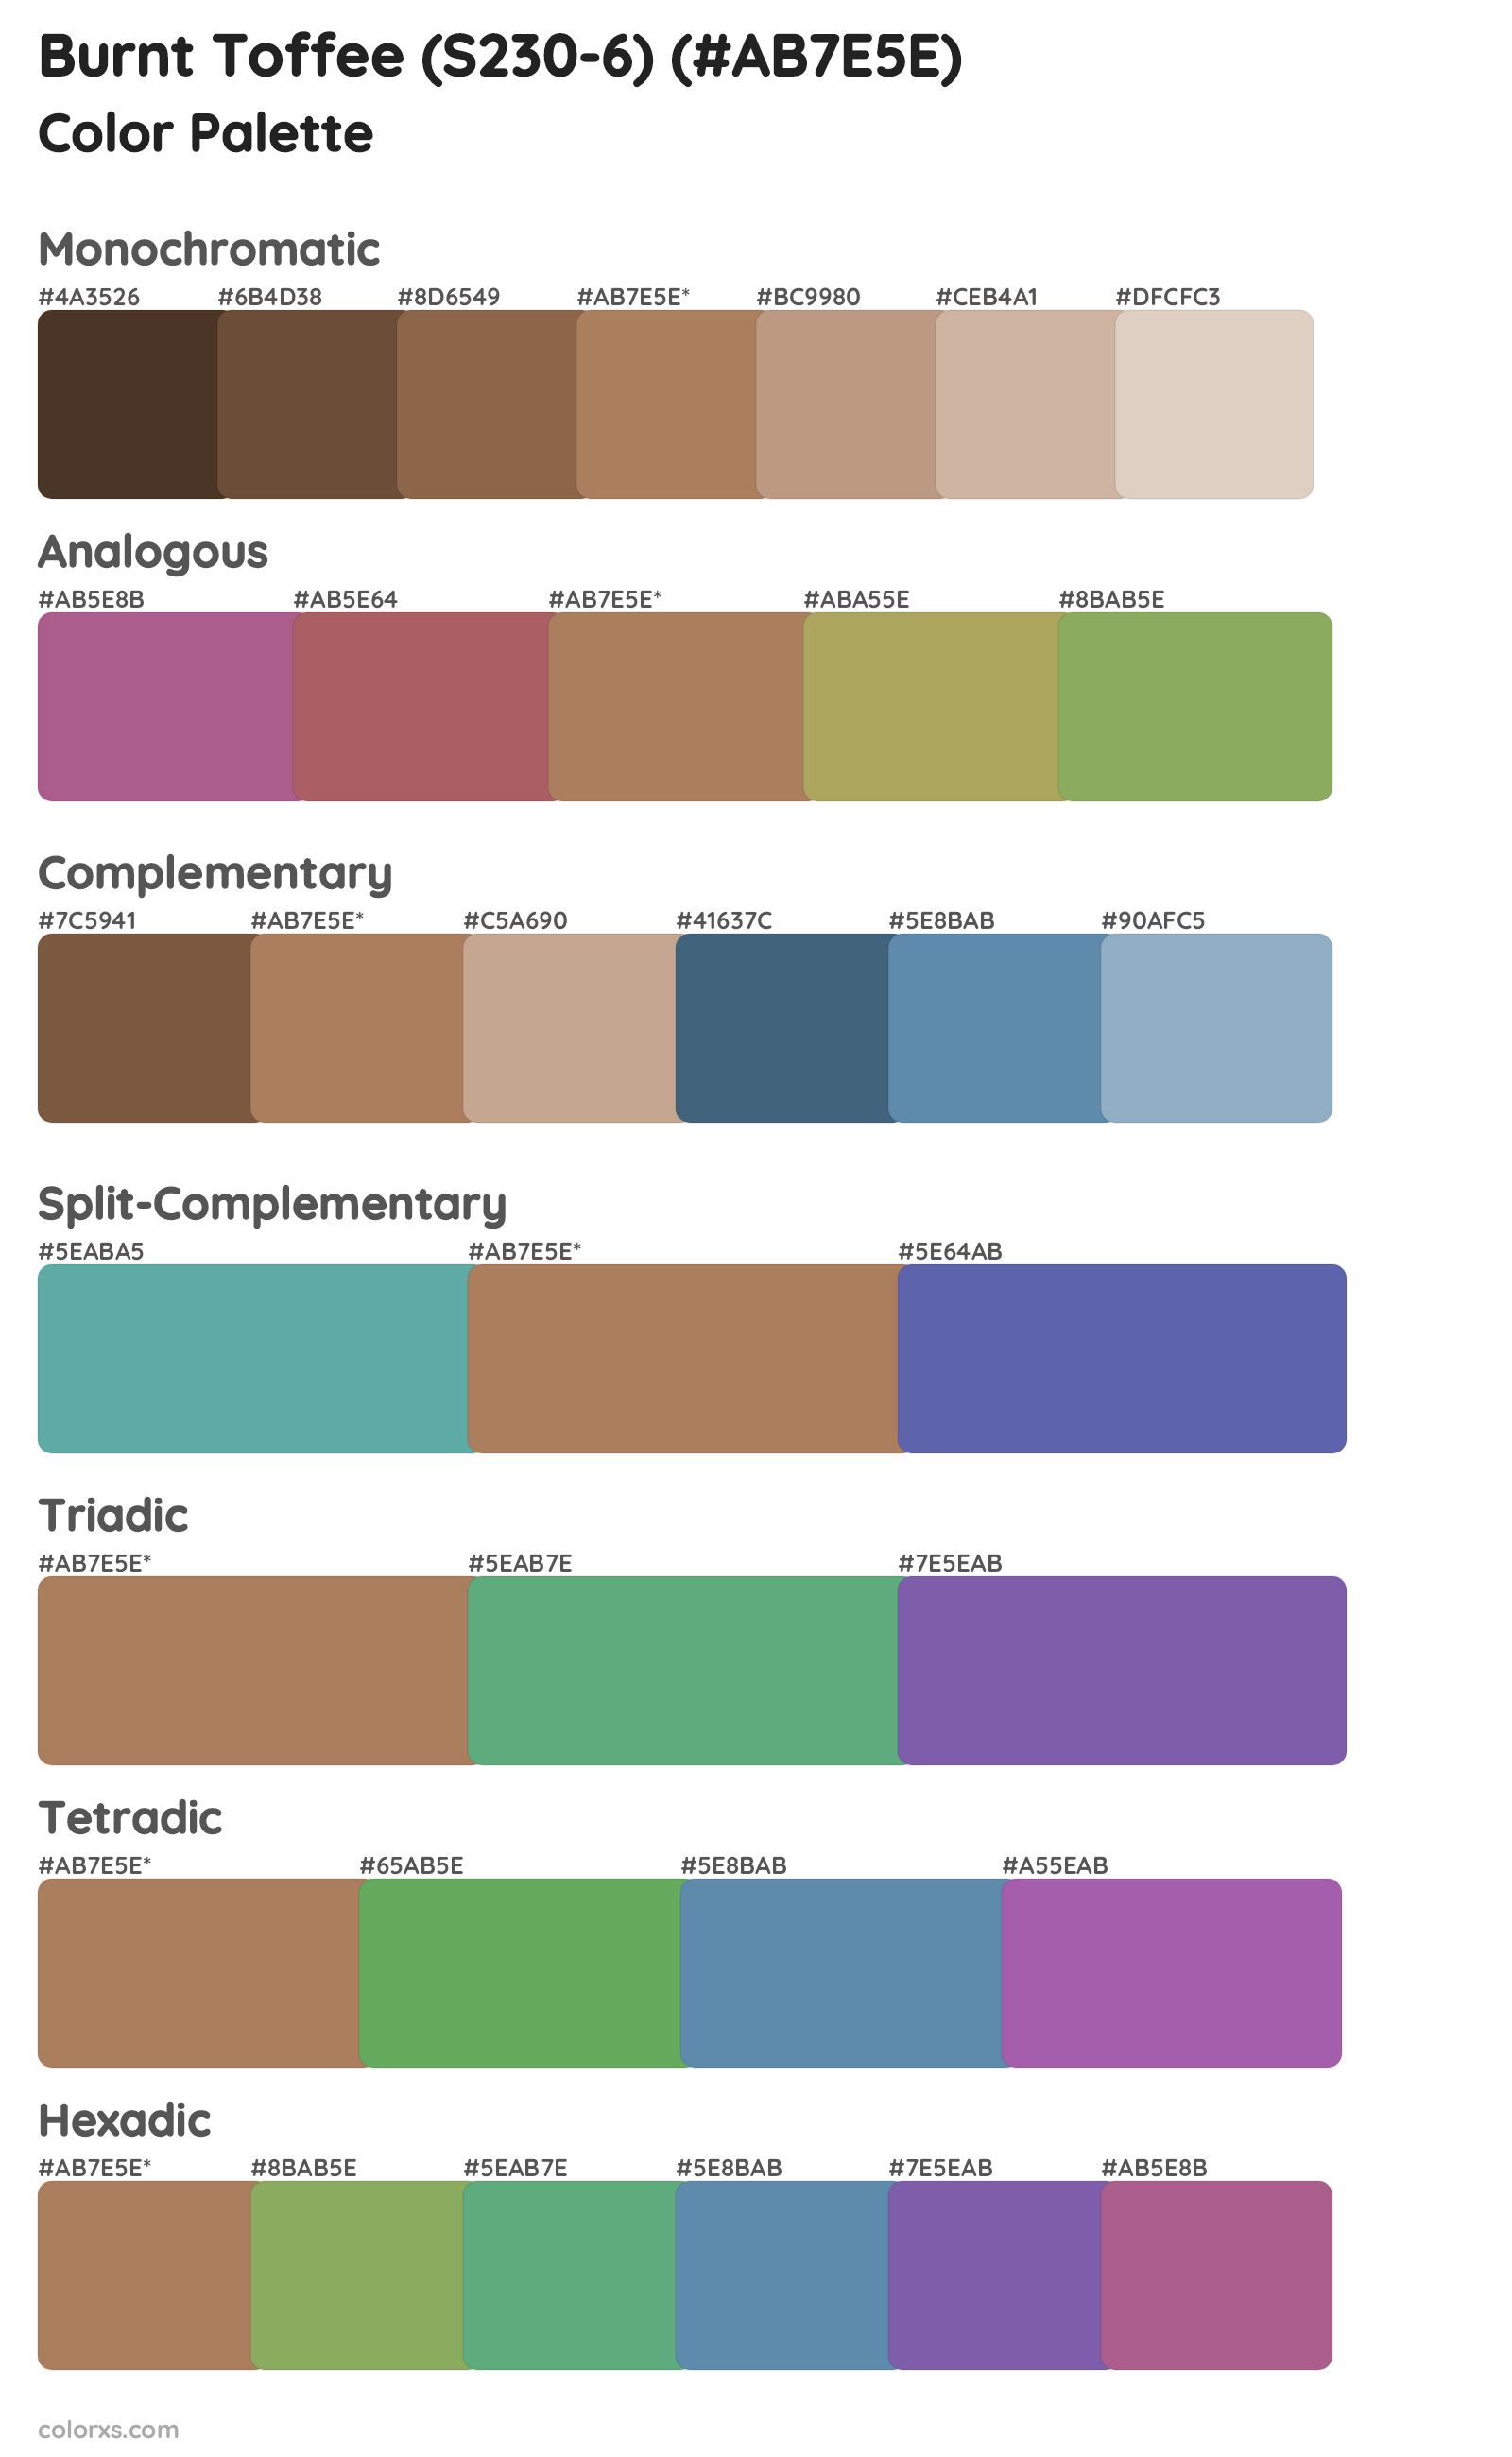 Burnt Toffee (S230-6) Color Scheme Palettes